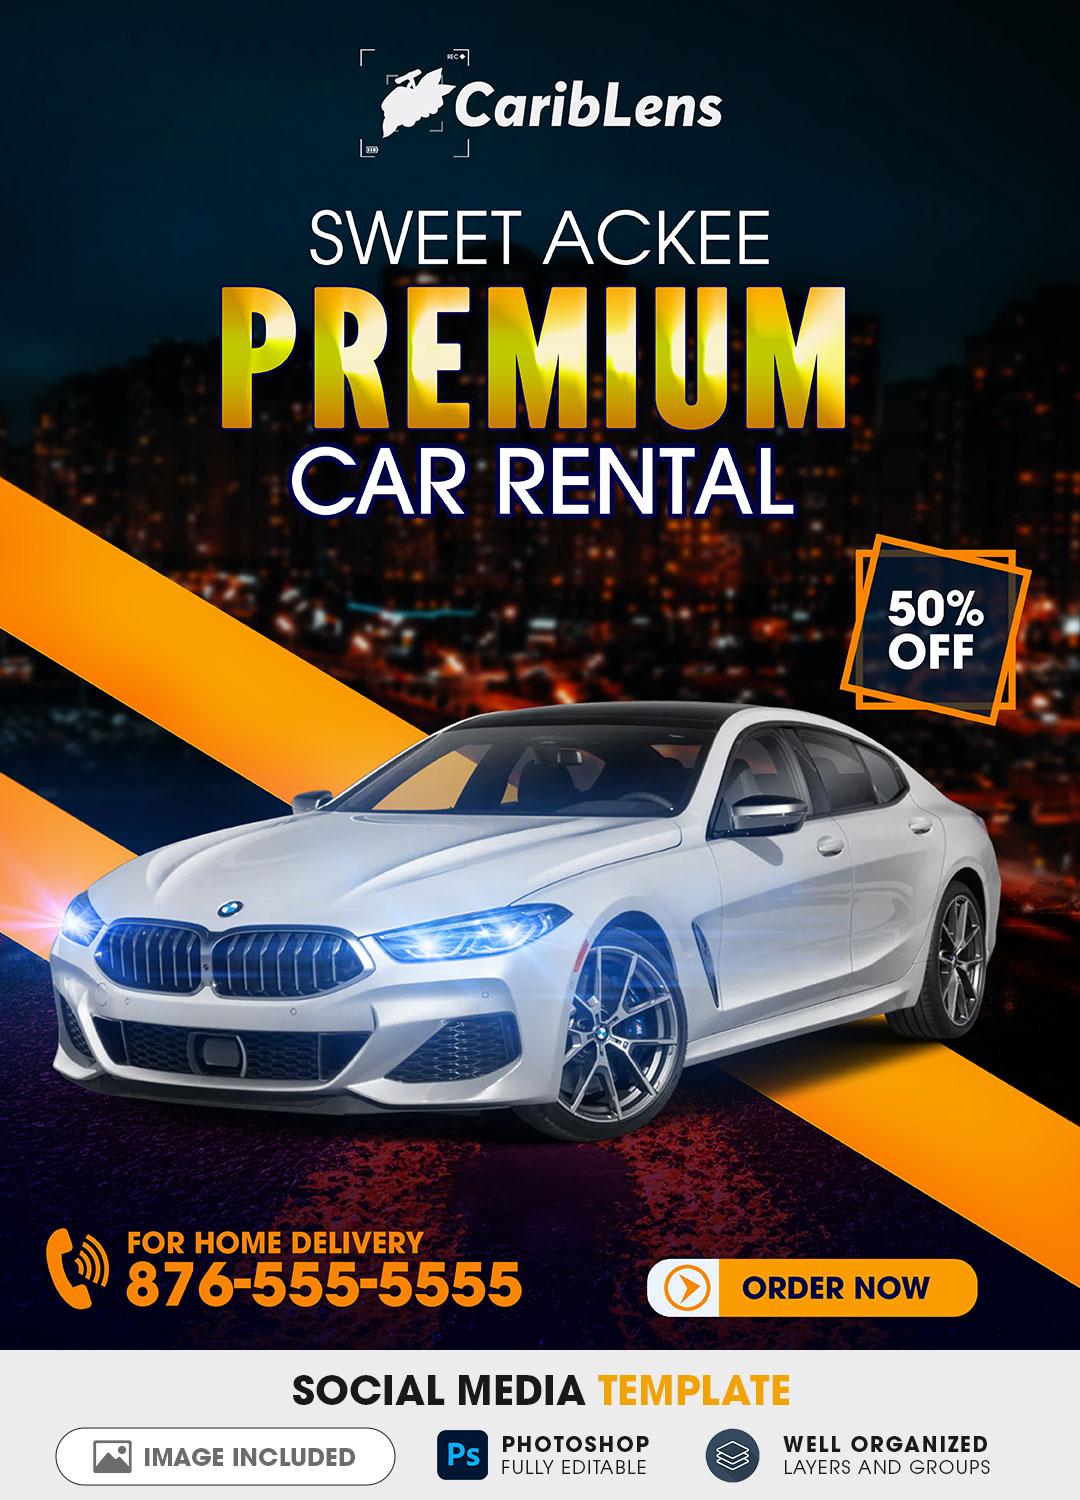 Sweet Ackee Premium Car Rental Service Promotional Flyer